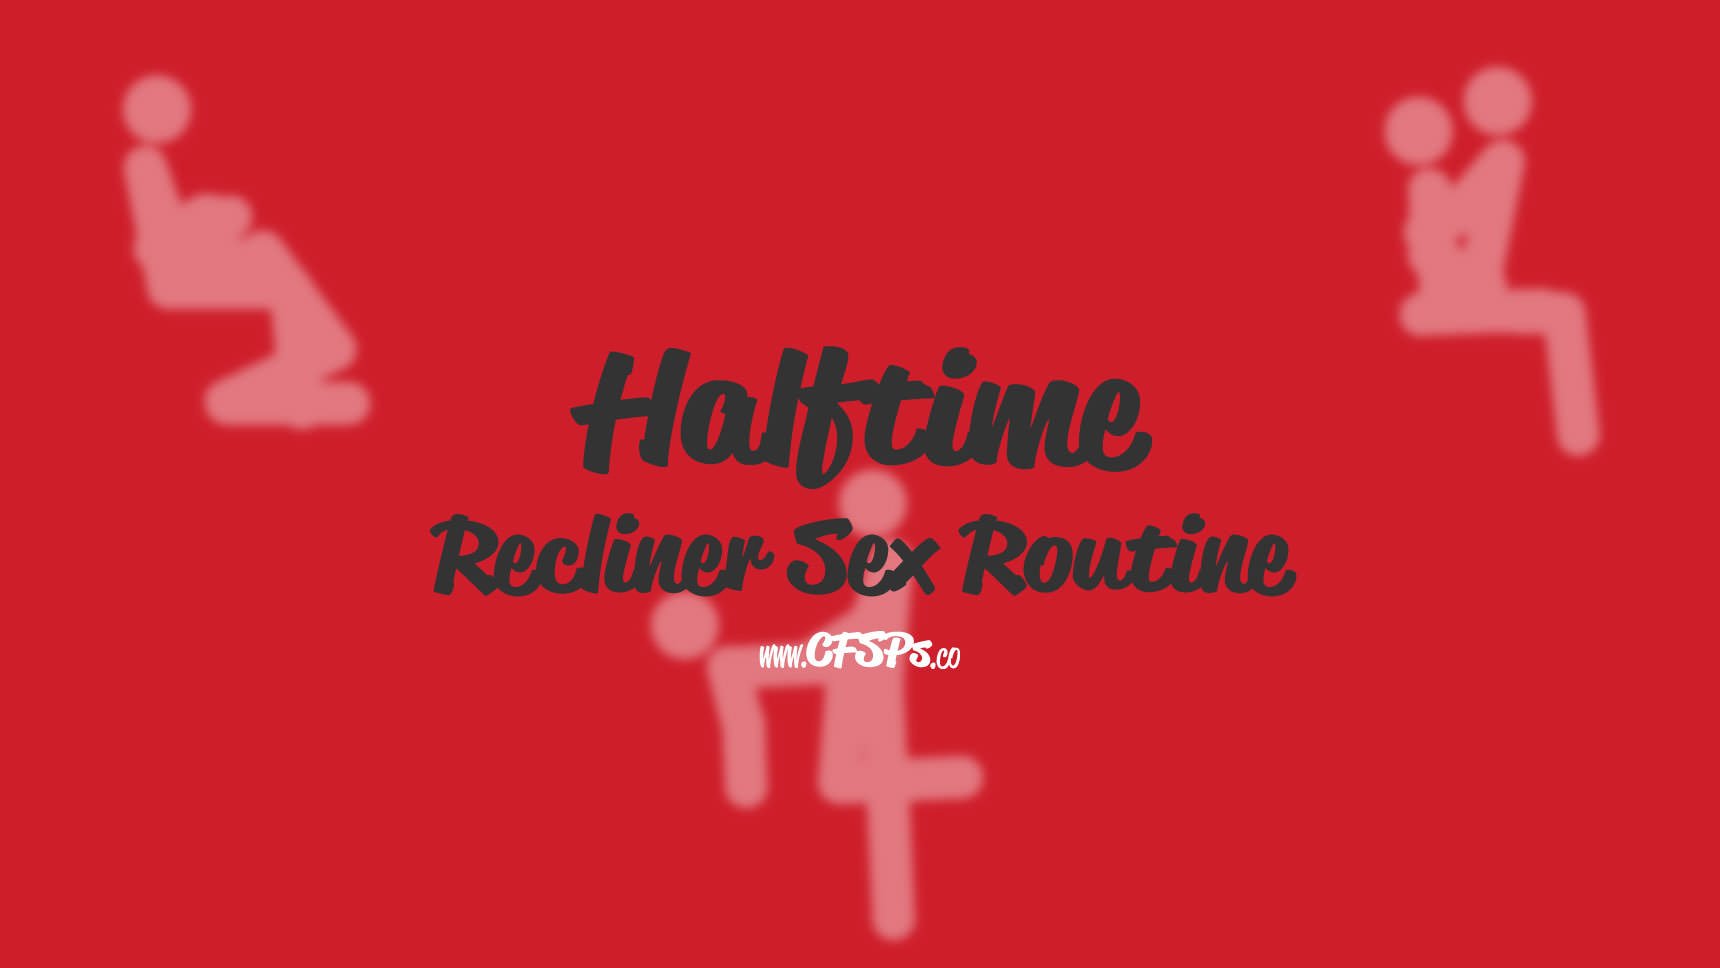 Halftime Recliner Sex Routine